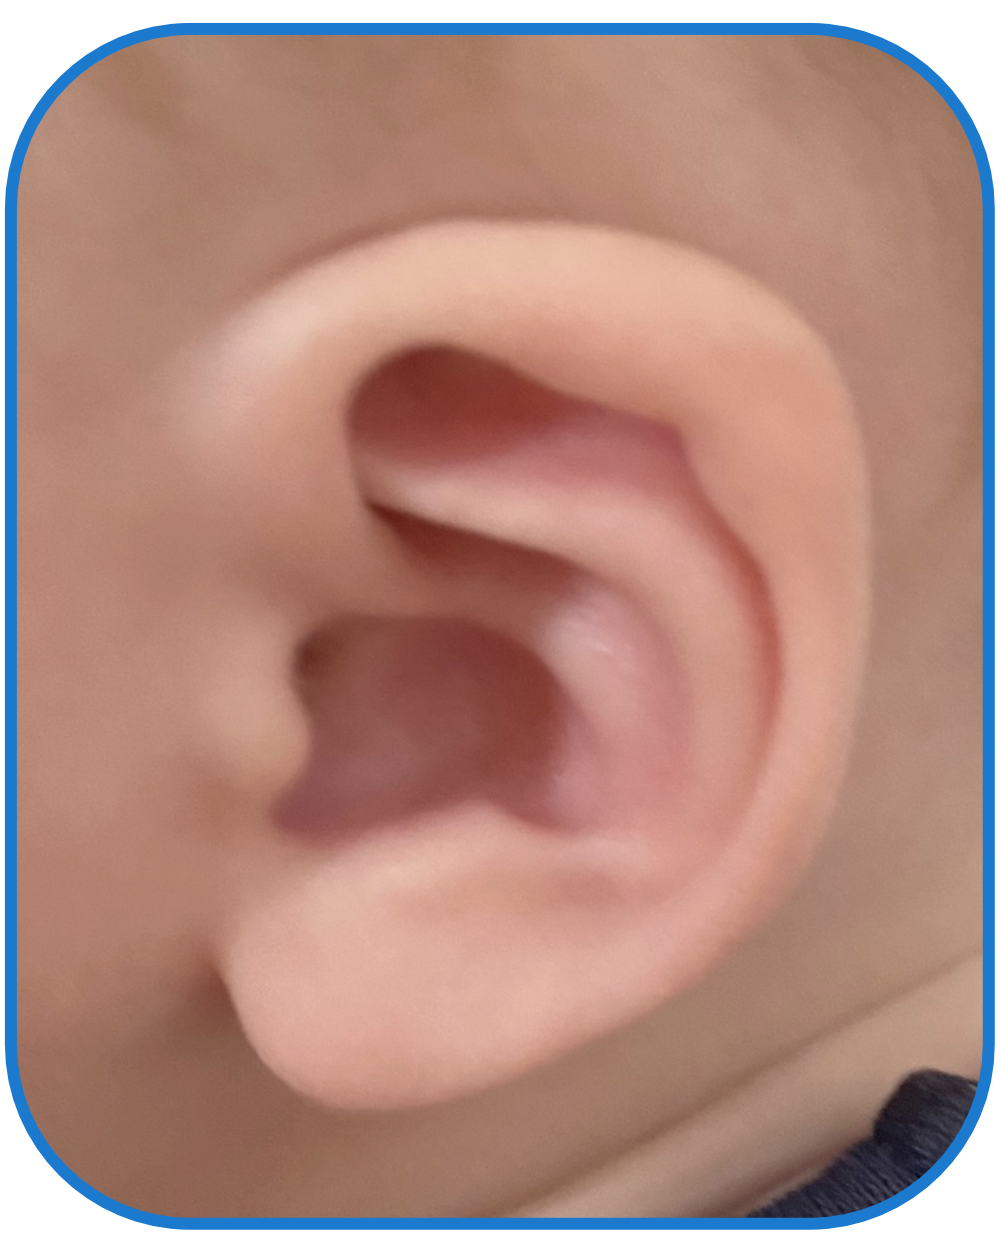 ear buddies results